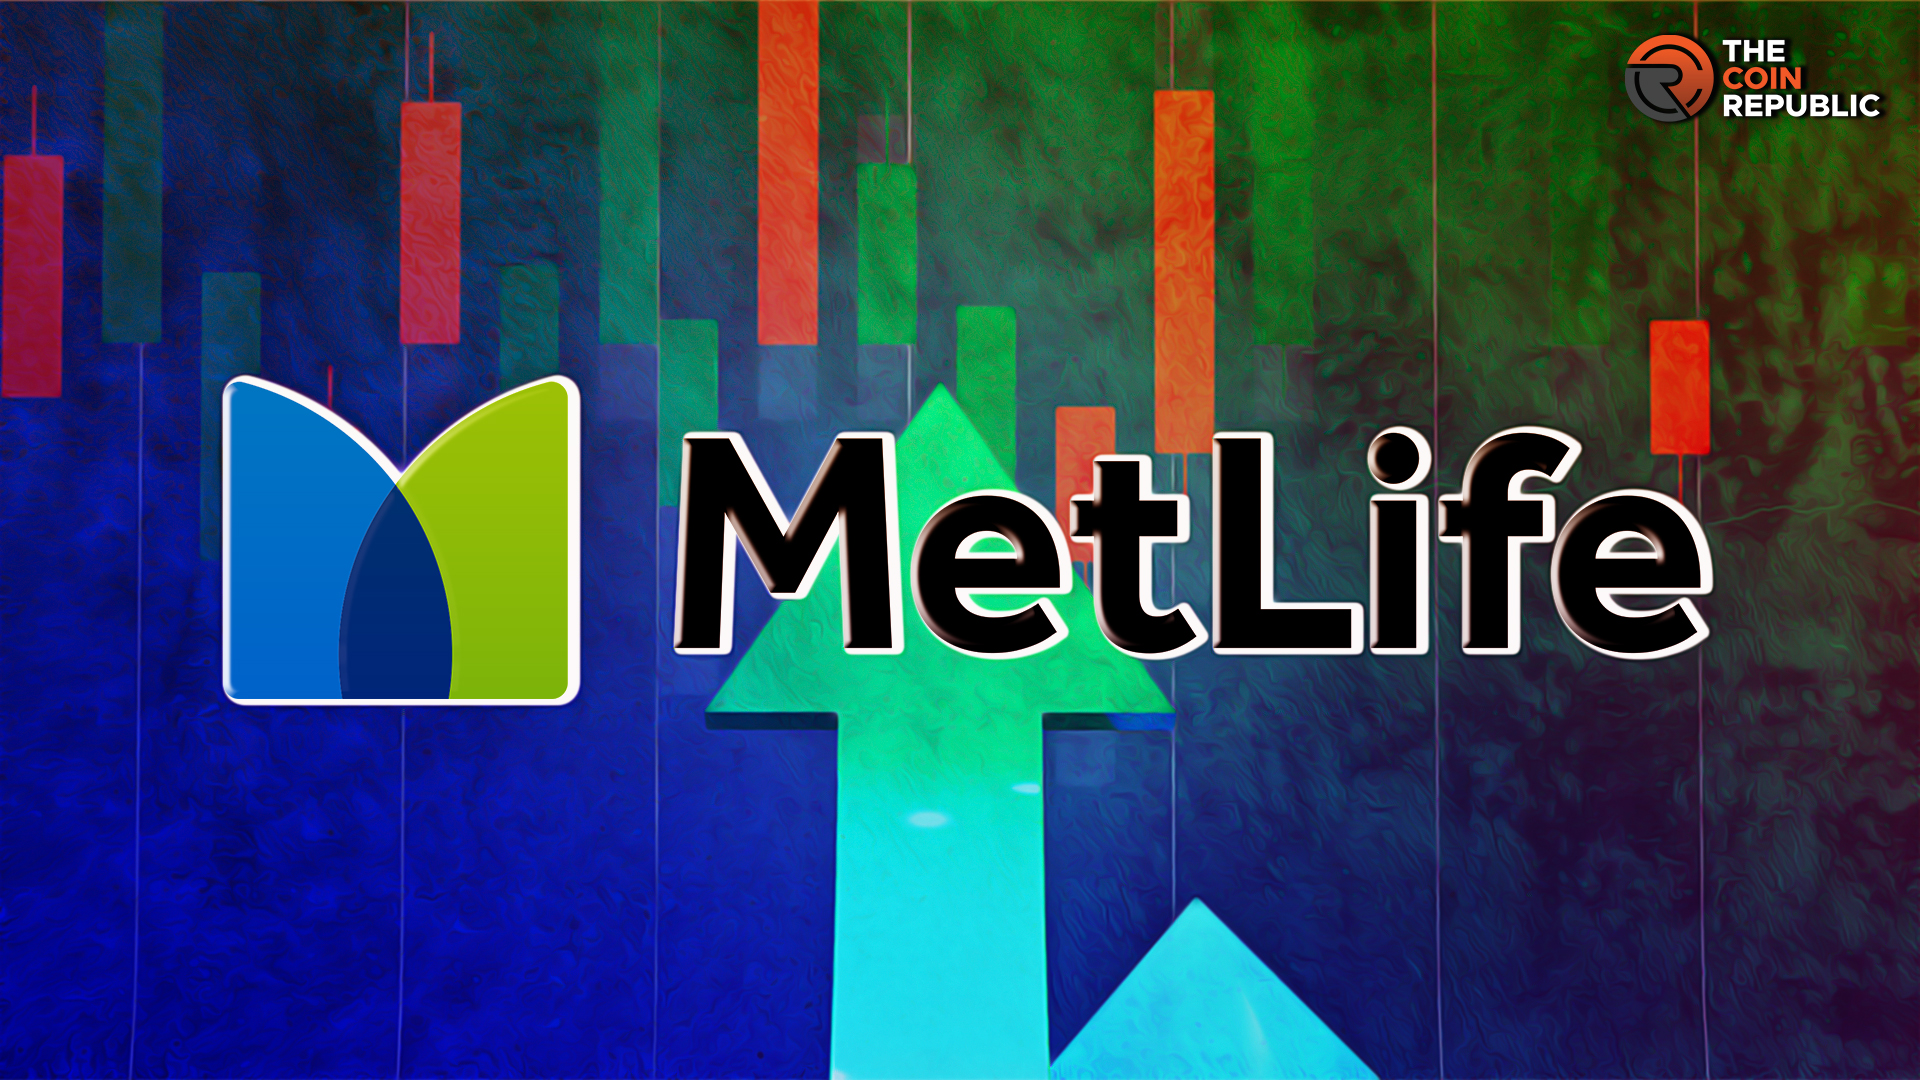 Metlife Stock Analysis: Can Metlife Stock Join The Bearish Rally?